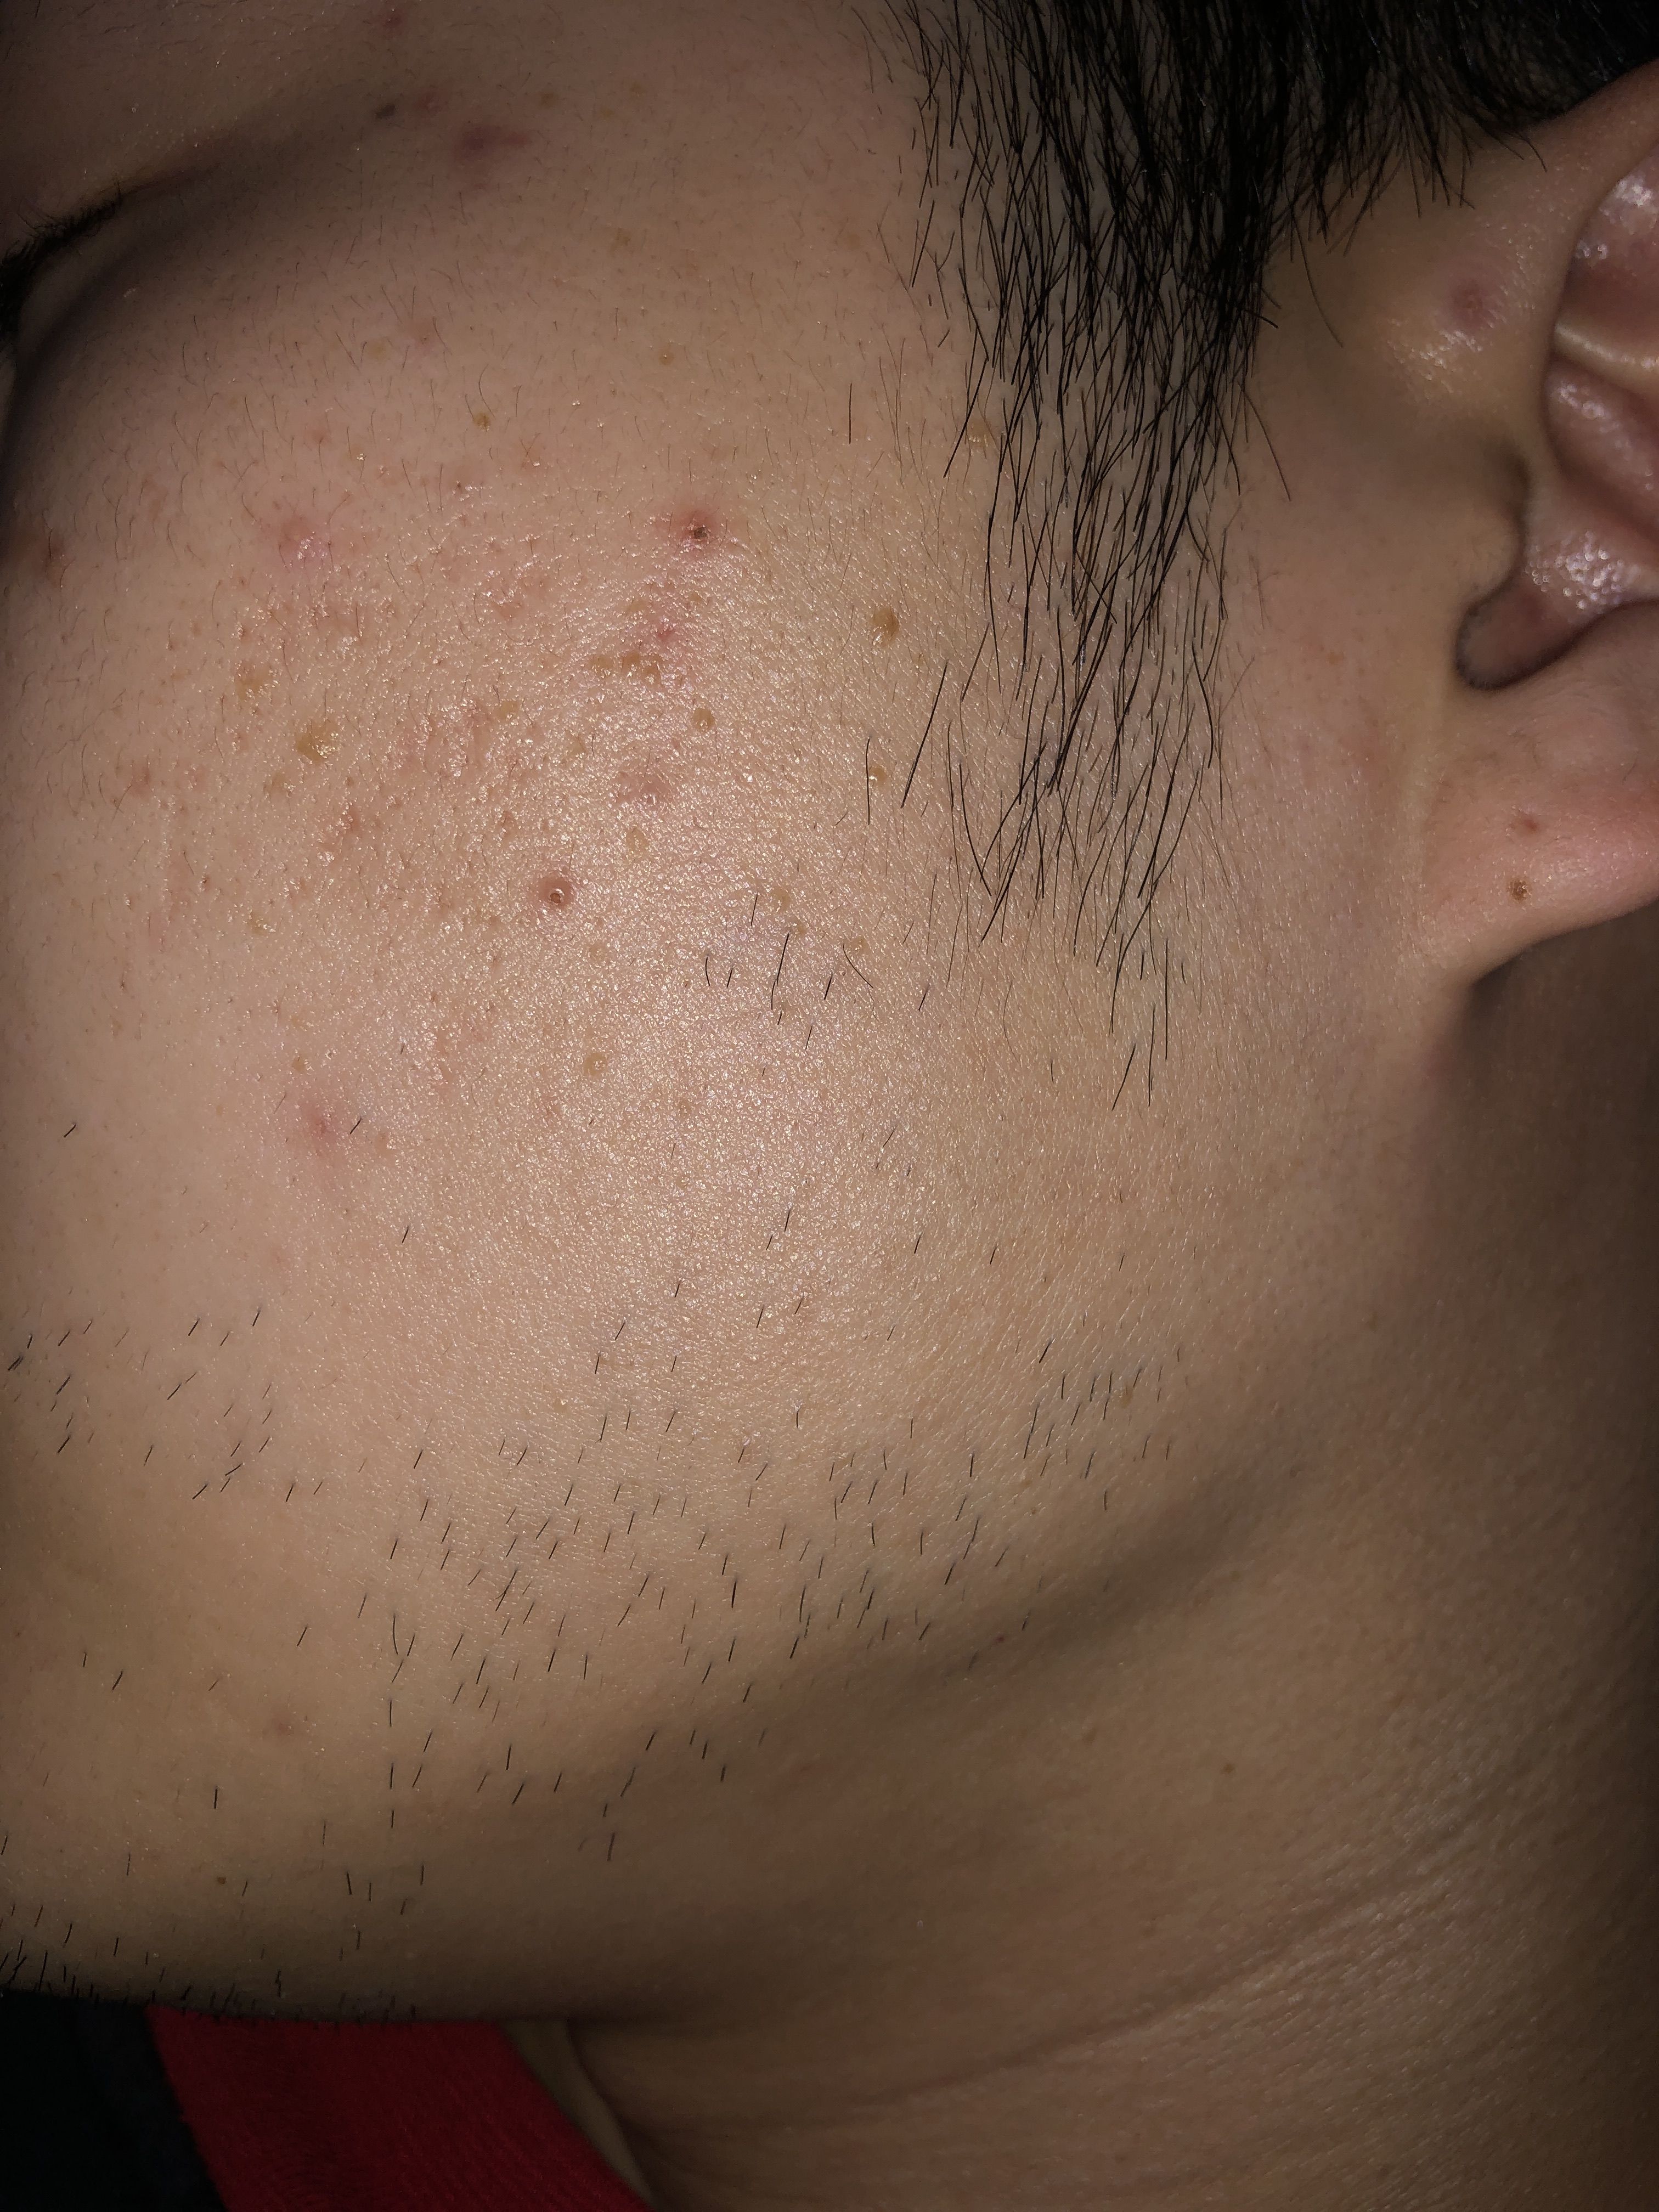 How should I treat my acne scars? - Scar treatments - Acne.org